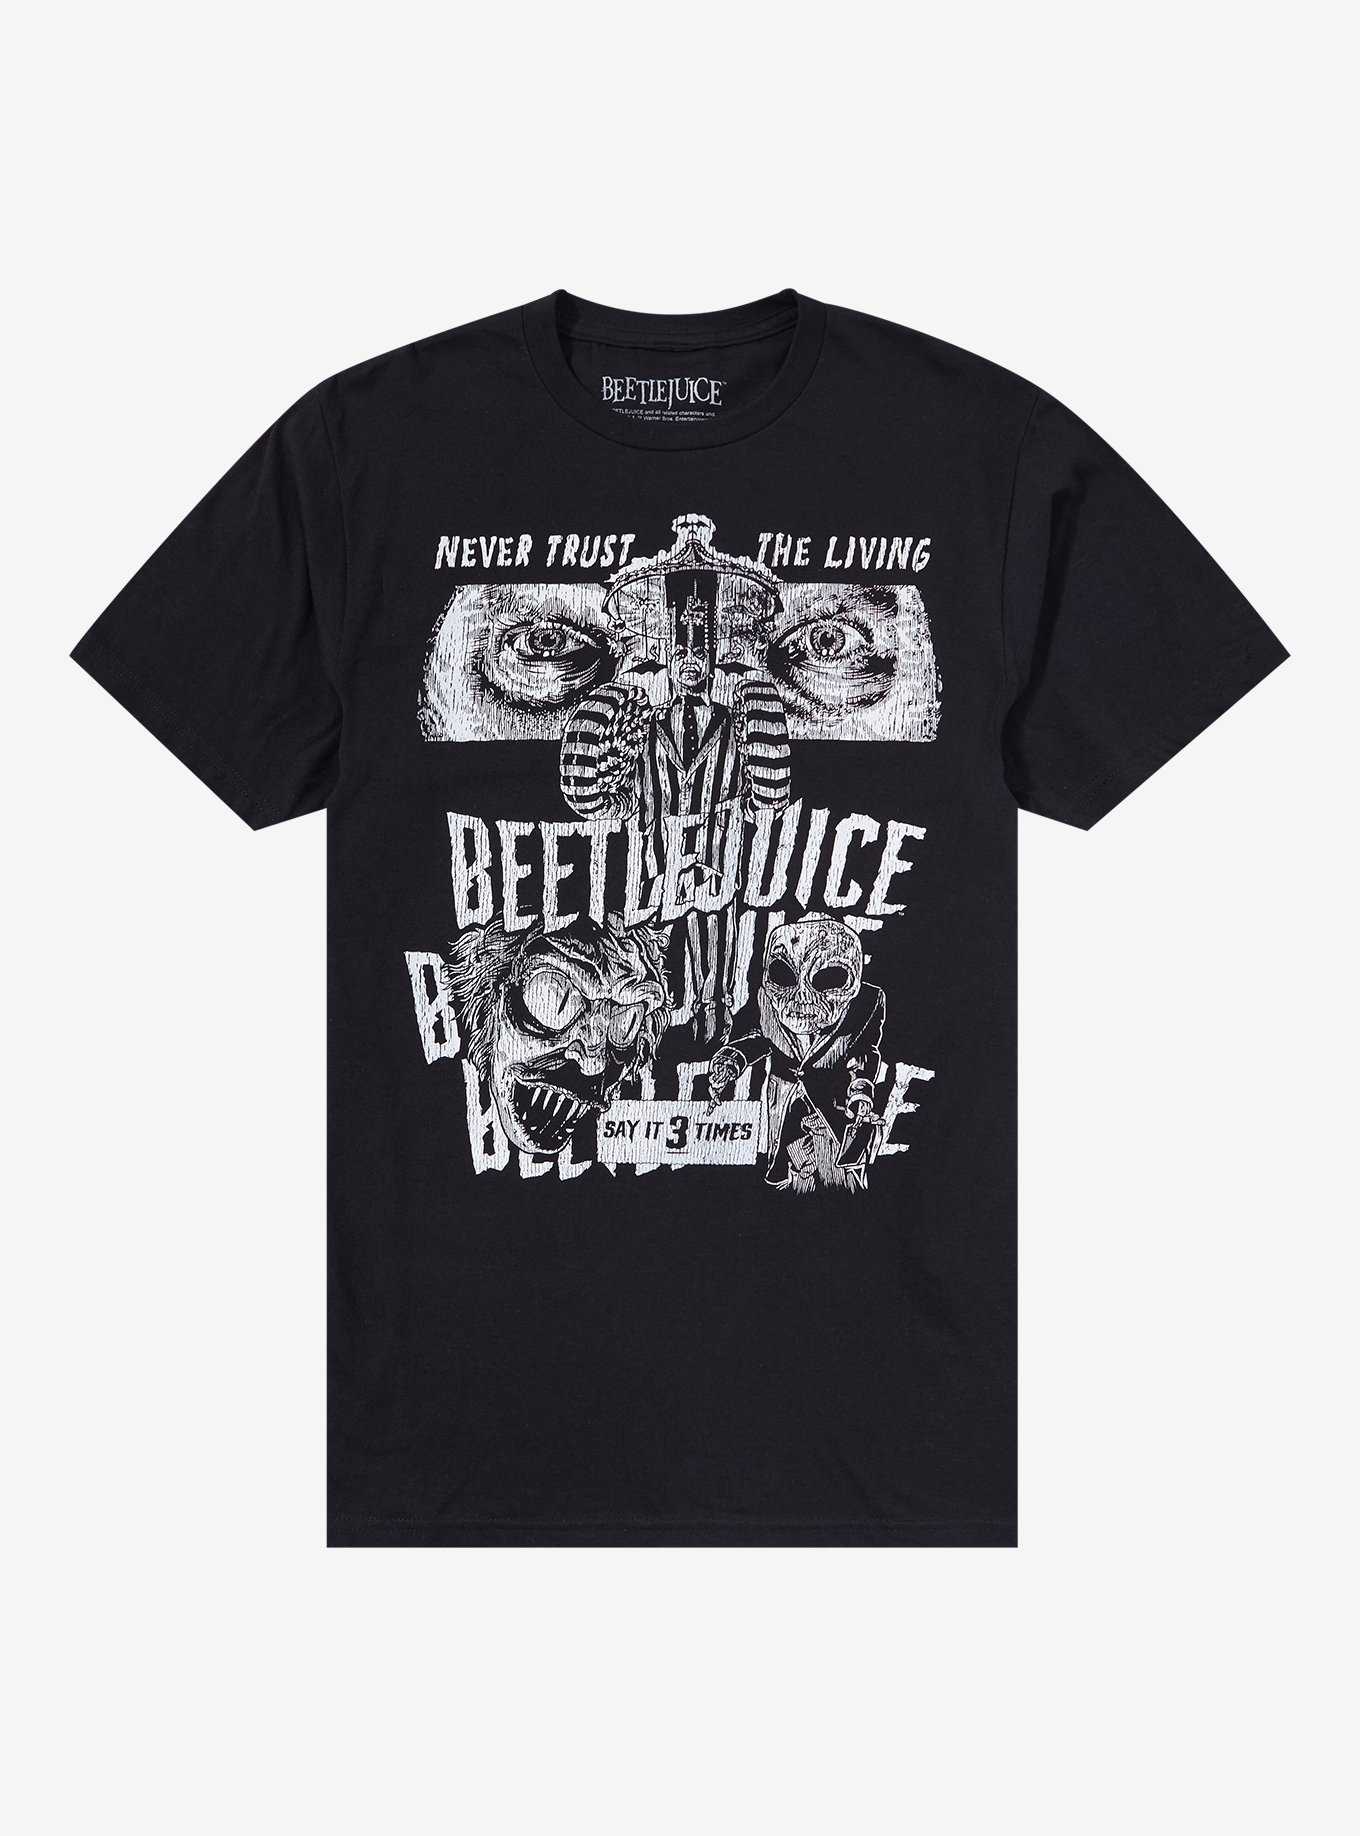 Beetlejuice Black & White Characters T-Shirt, , hi-res